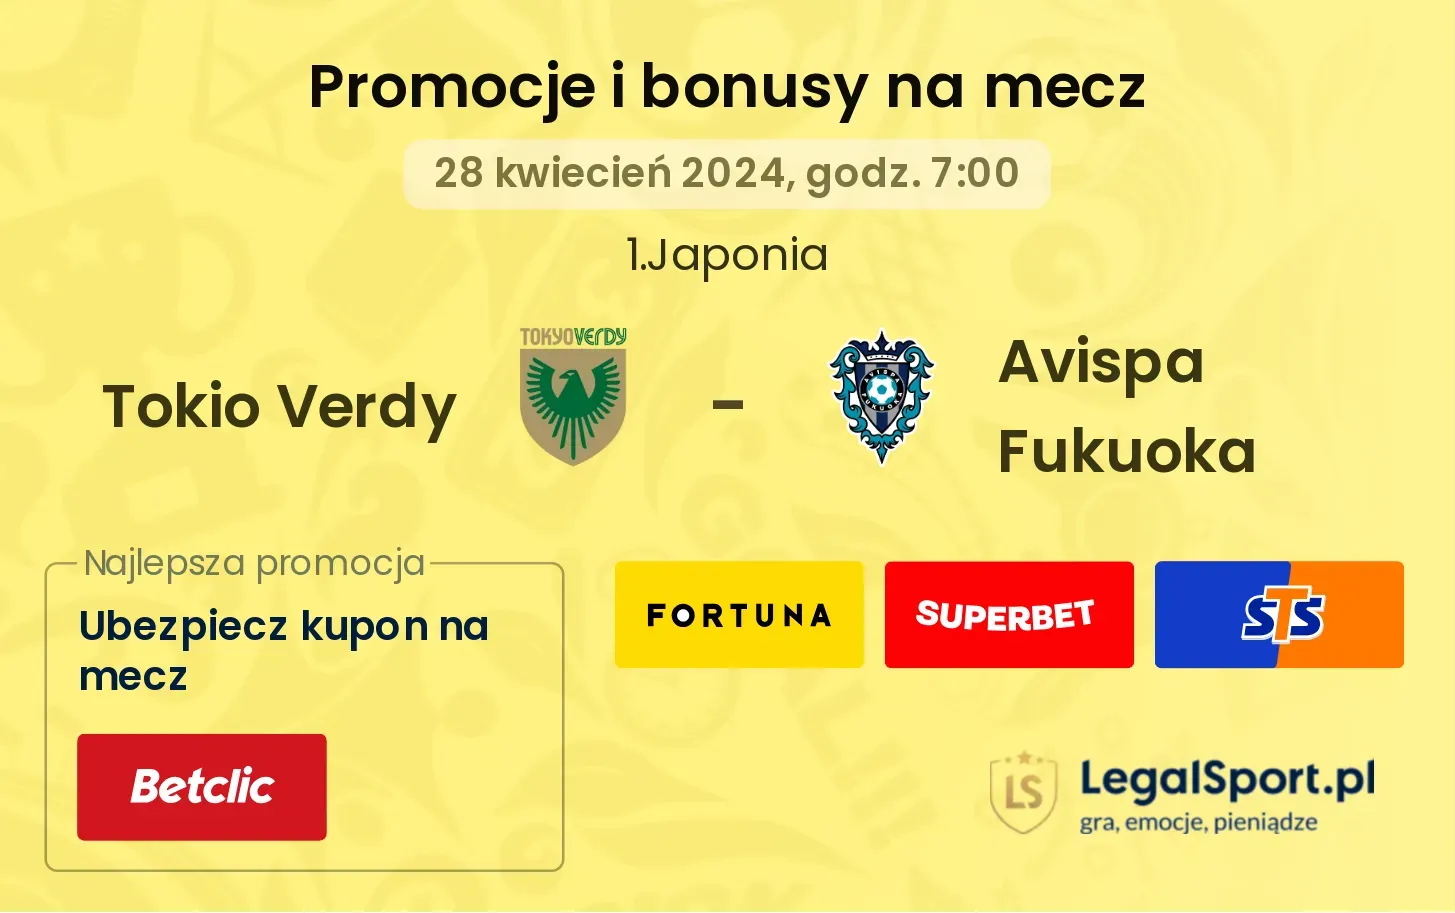 Tokio Verdy - Avispa Fukuoka promocje bonusy na mecz